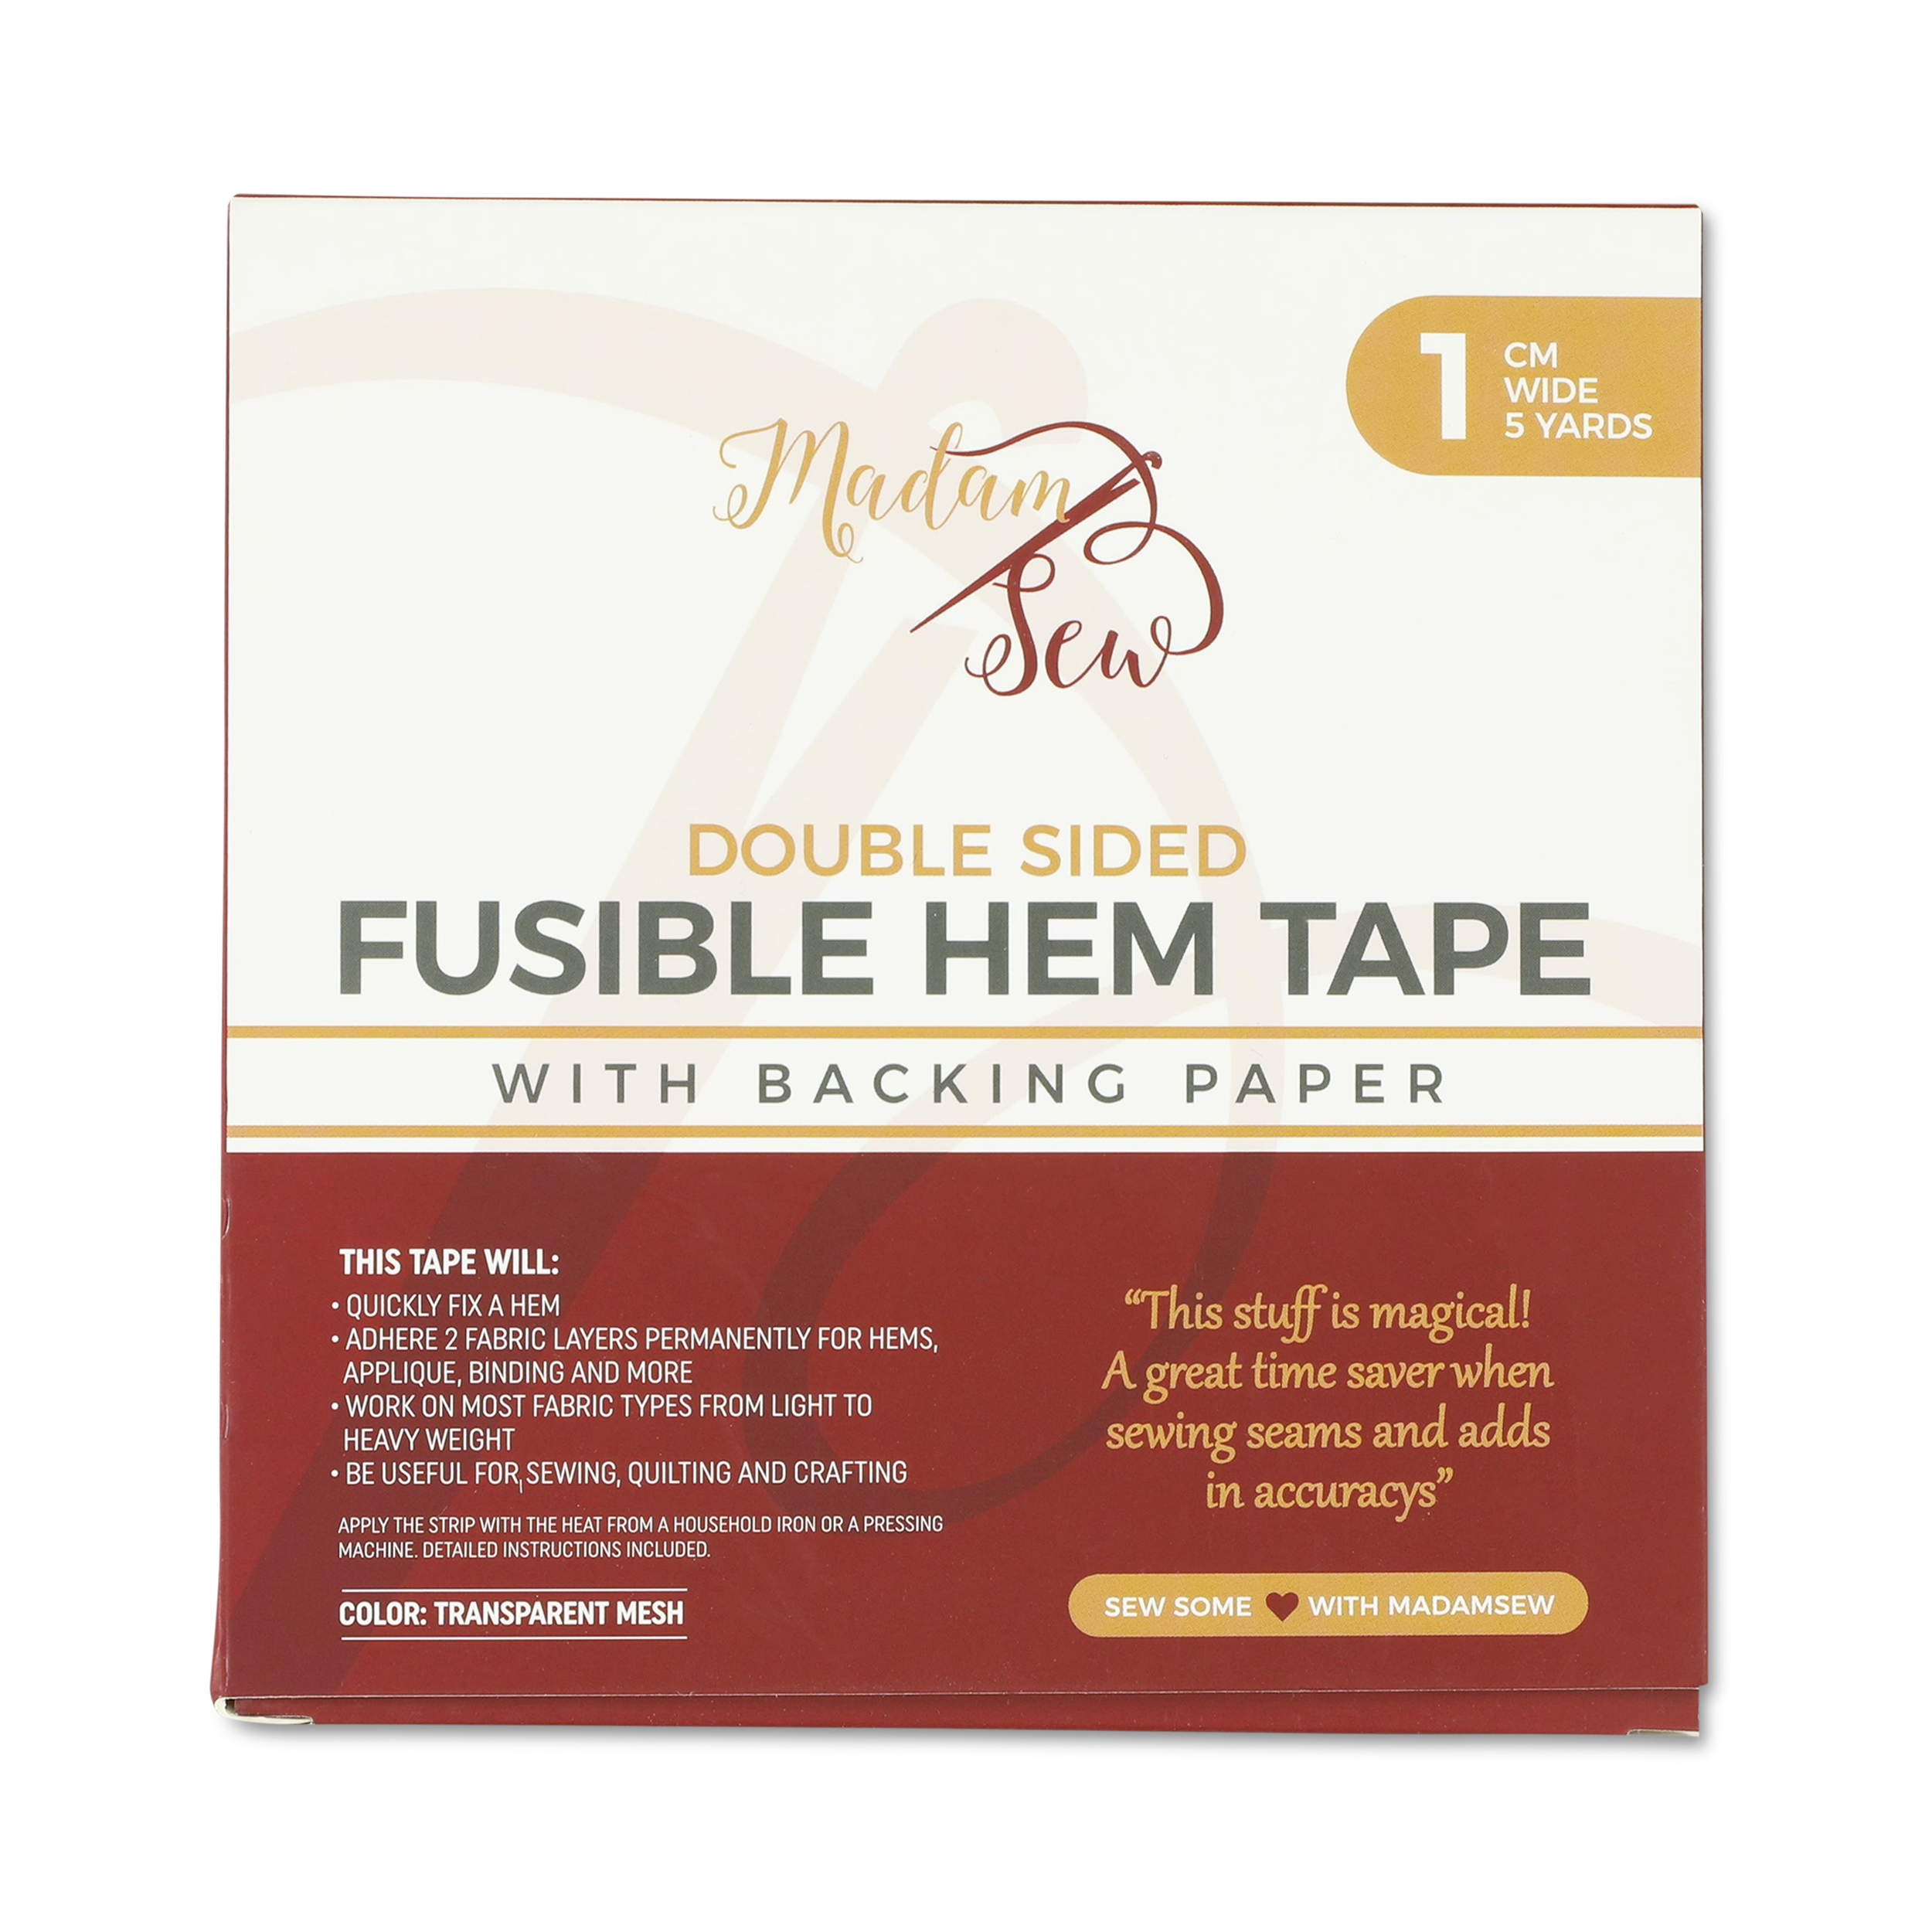 Fusible Hem Tape Instruction Manual